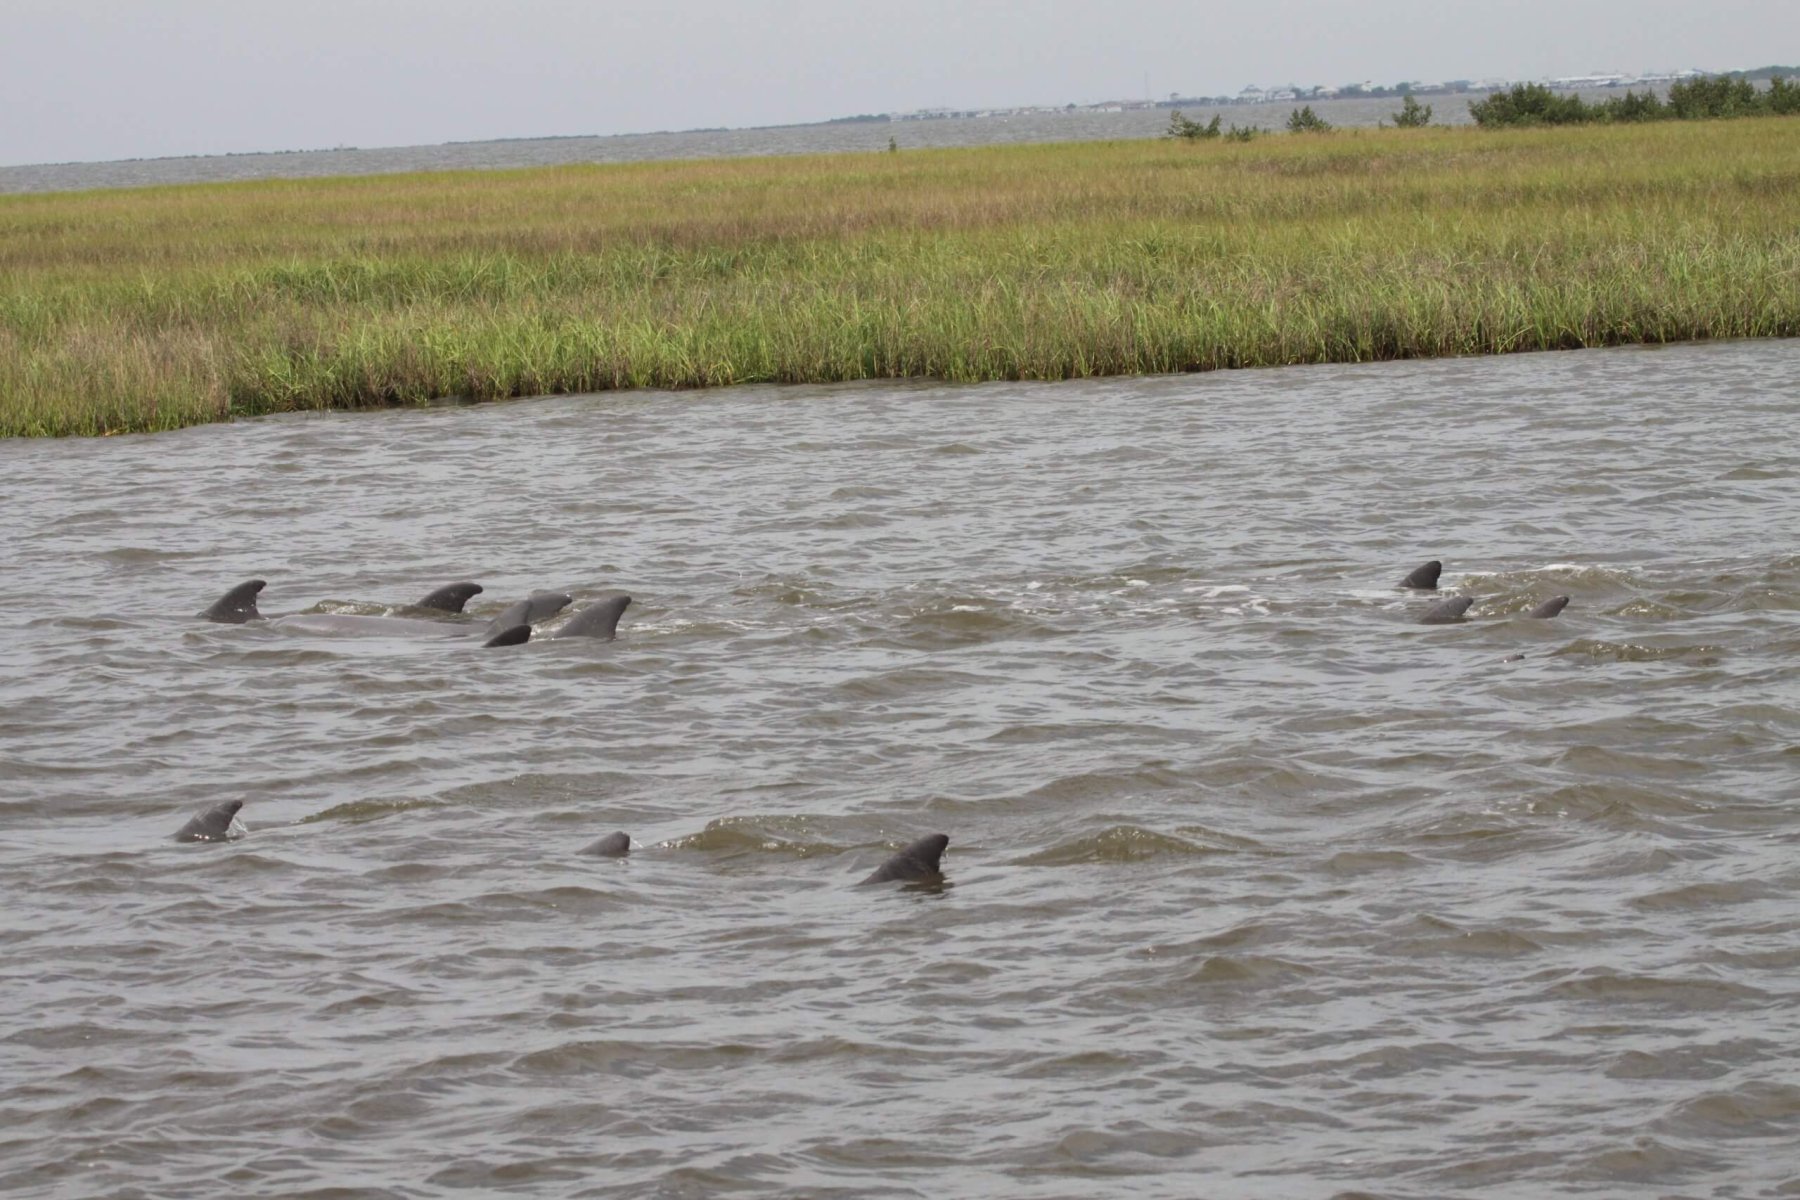 Over ten Barataria Bay bottlenose dolphins